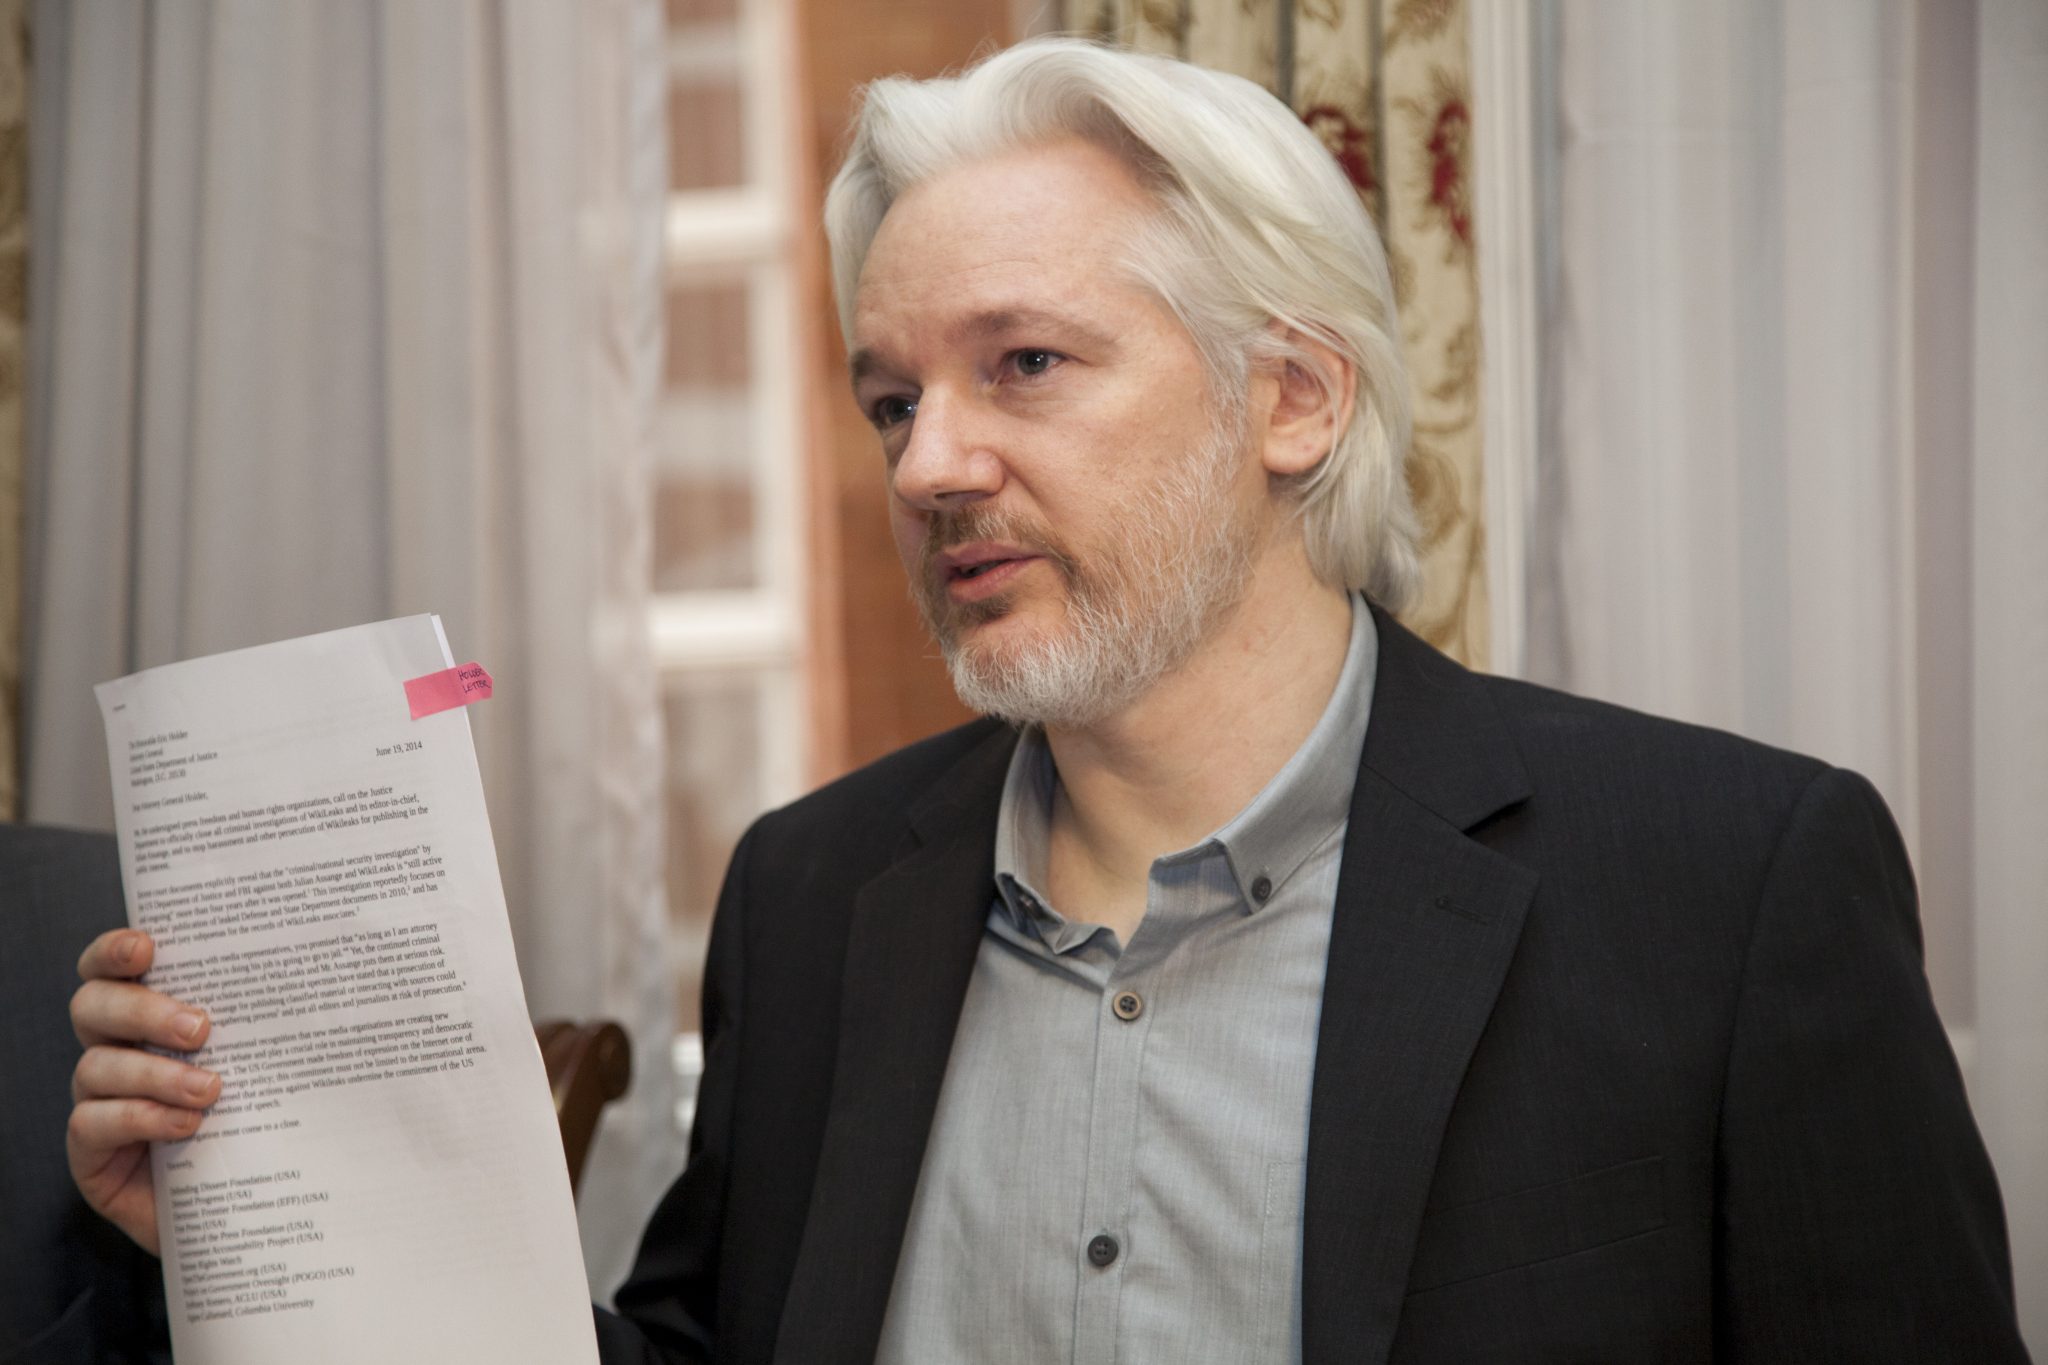 Julian Assange, the founder of WikiLeaks, has been released from prison